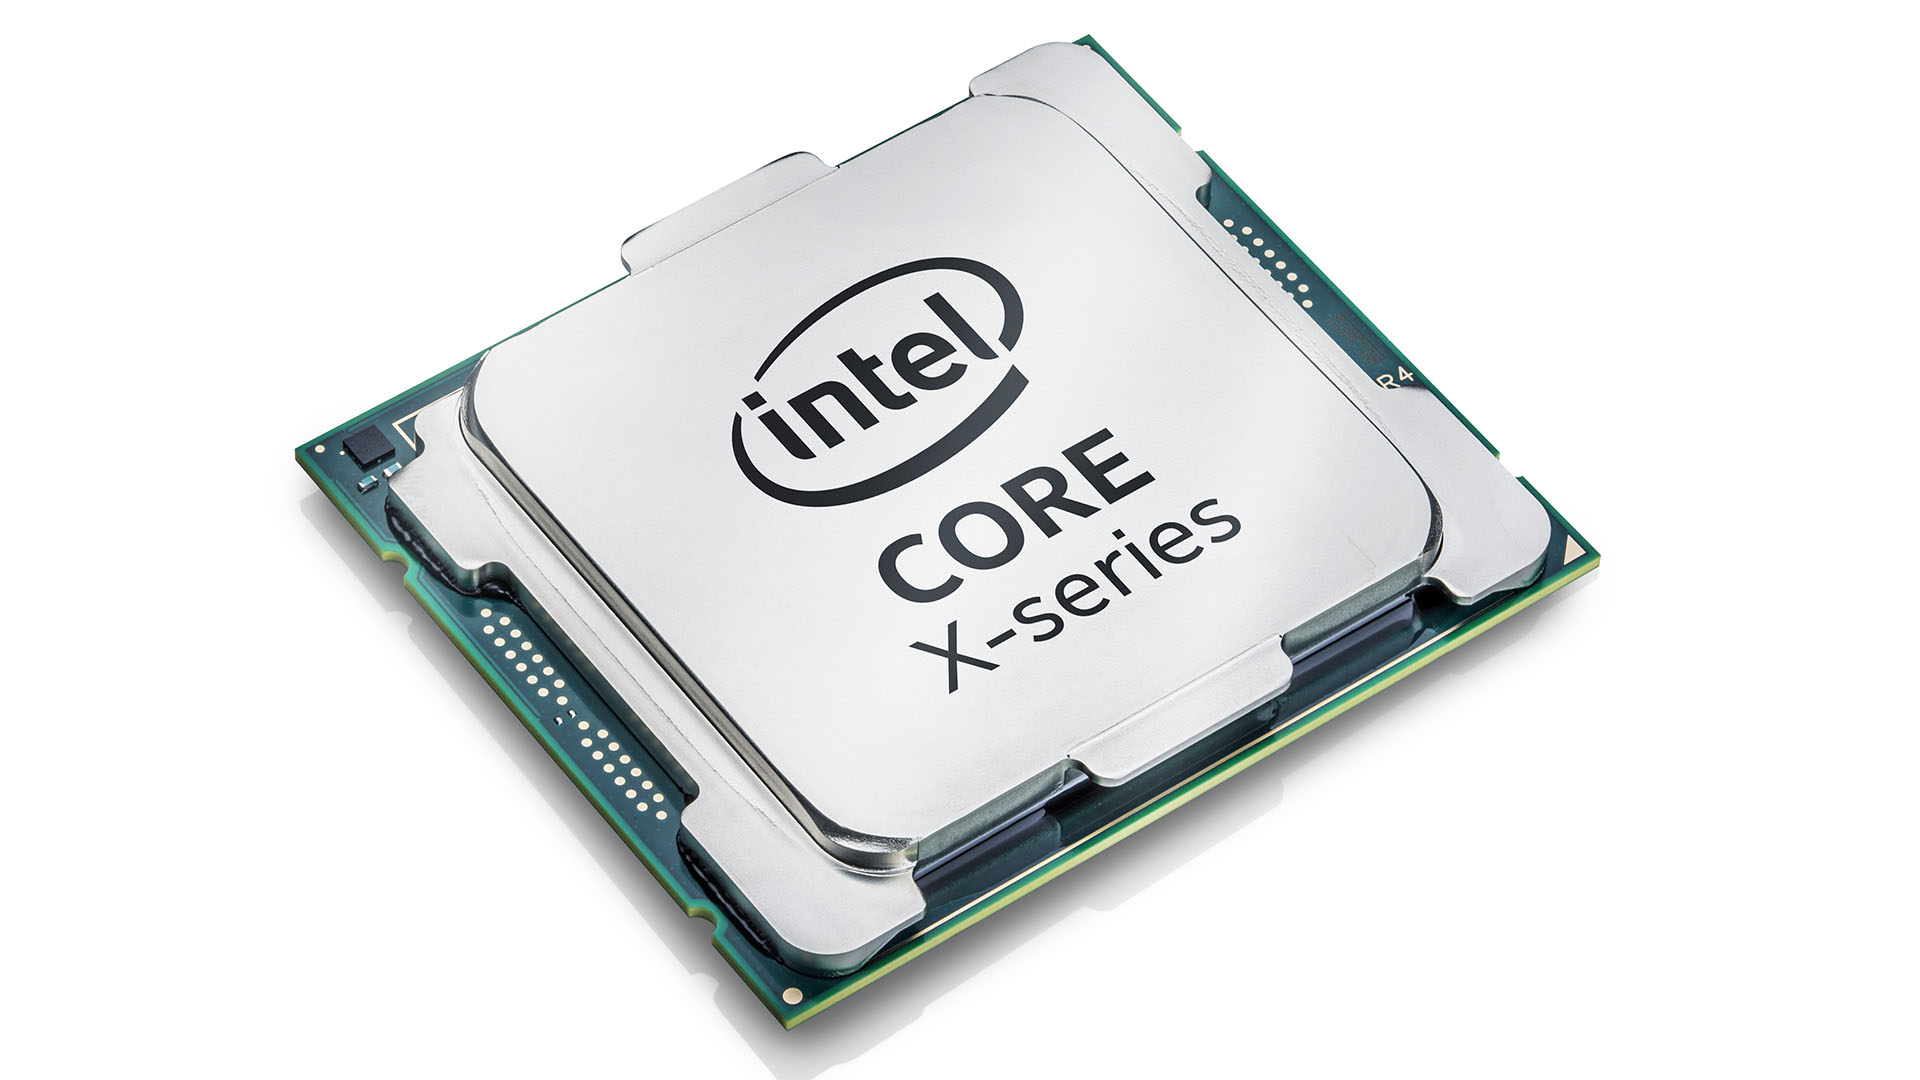 Pijlpunt liefde Verbergen The $2,000 Intel i9 9980XE is less than 3% quicker than its last-gen  18-core CPU | PCGamesN